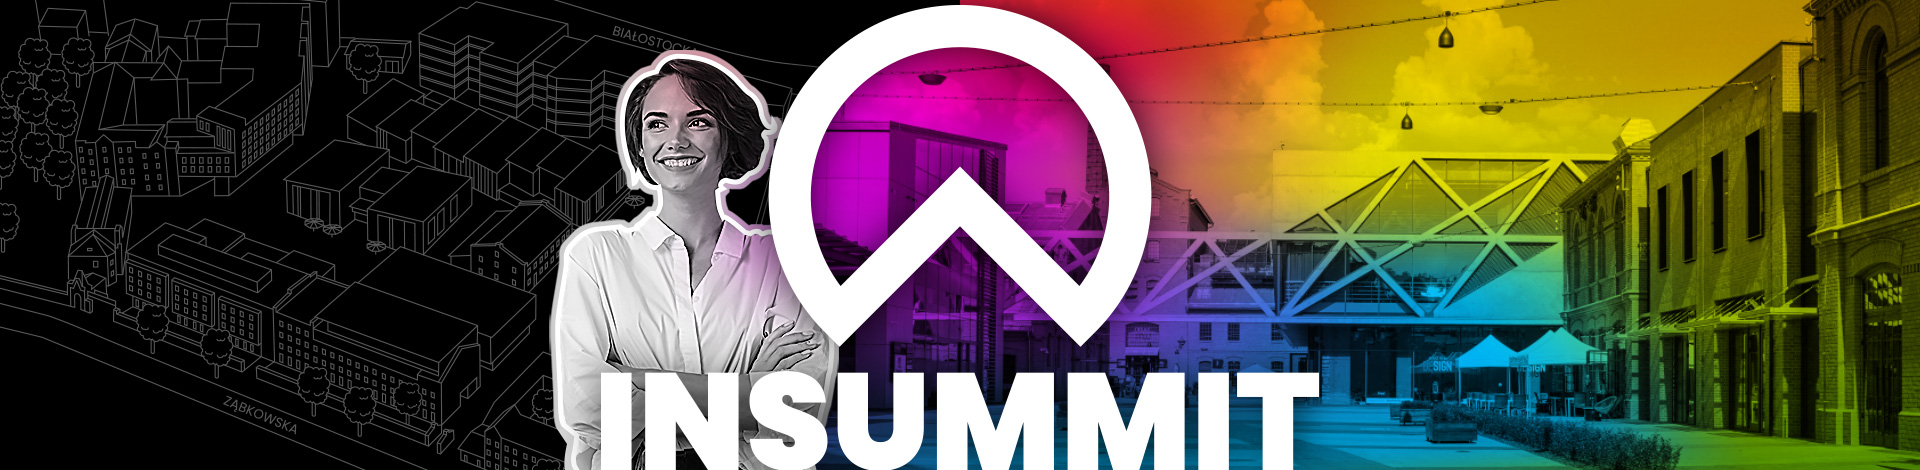 INSUMMIT Festiwal Insightów i Innowacji